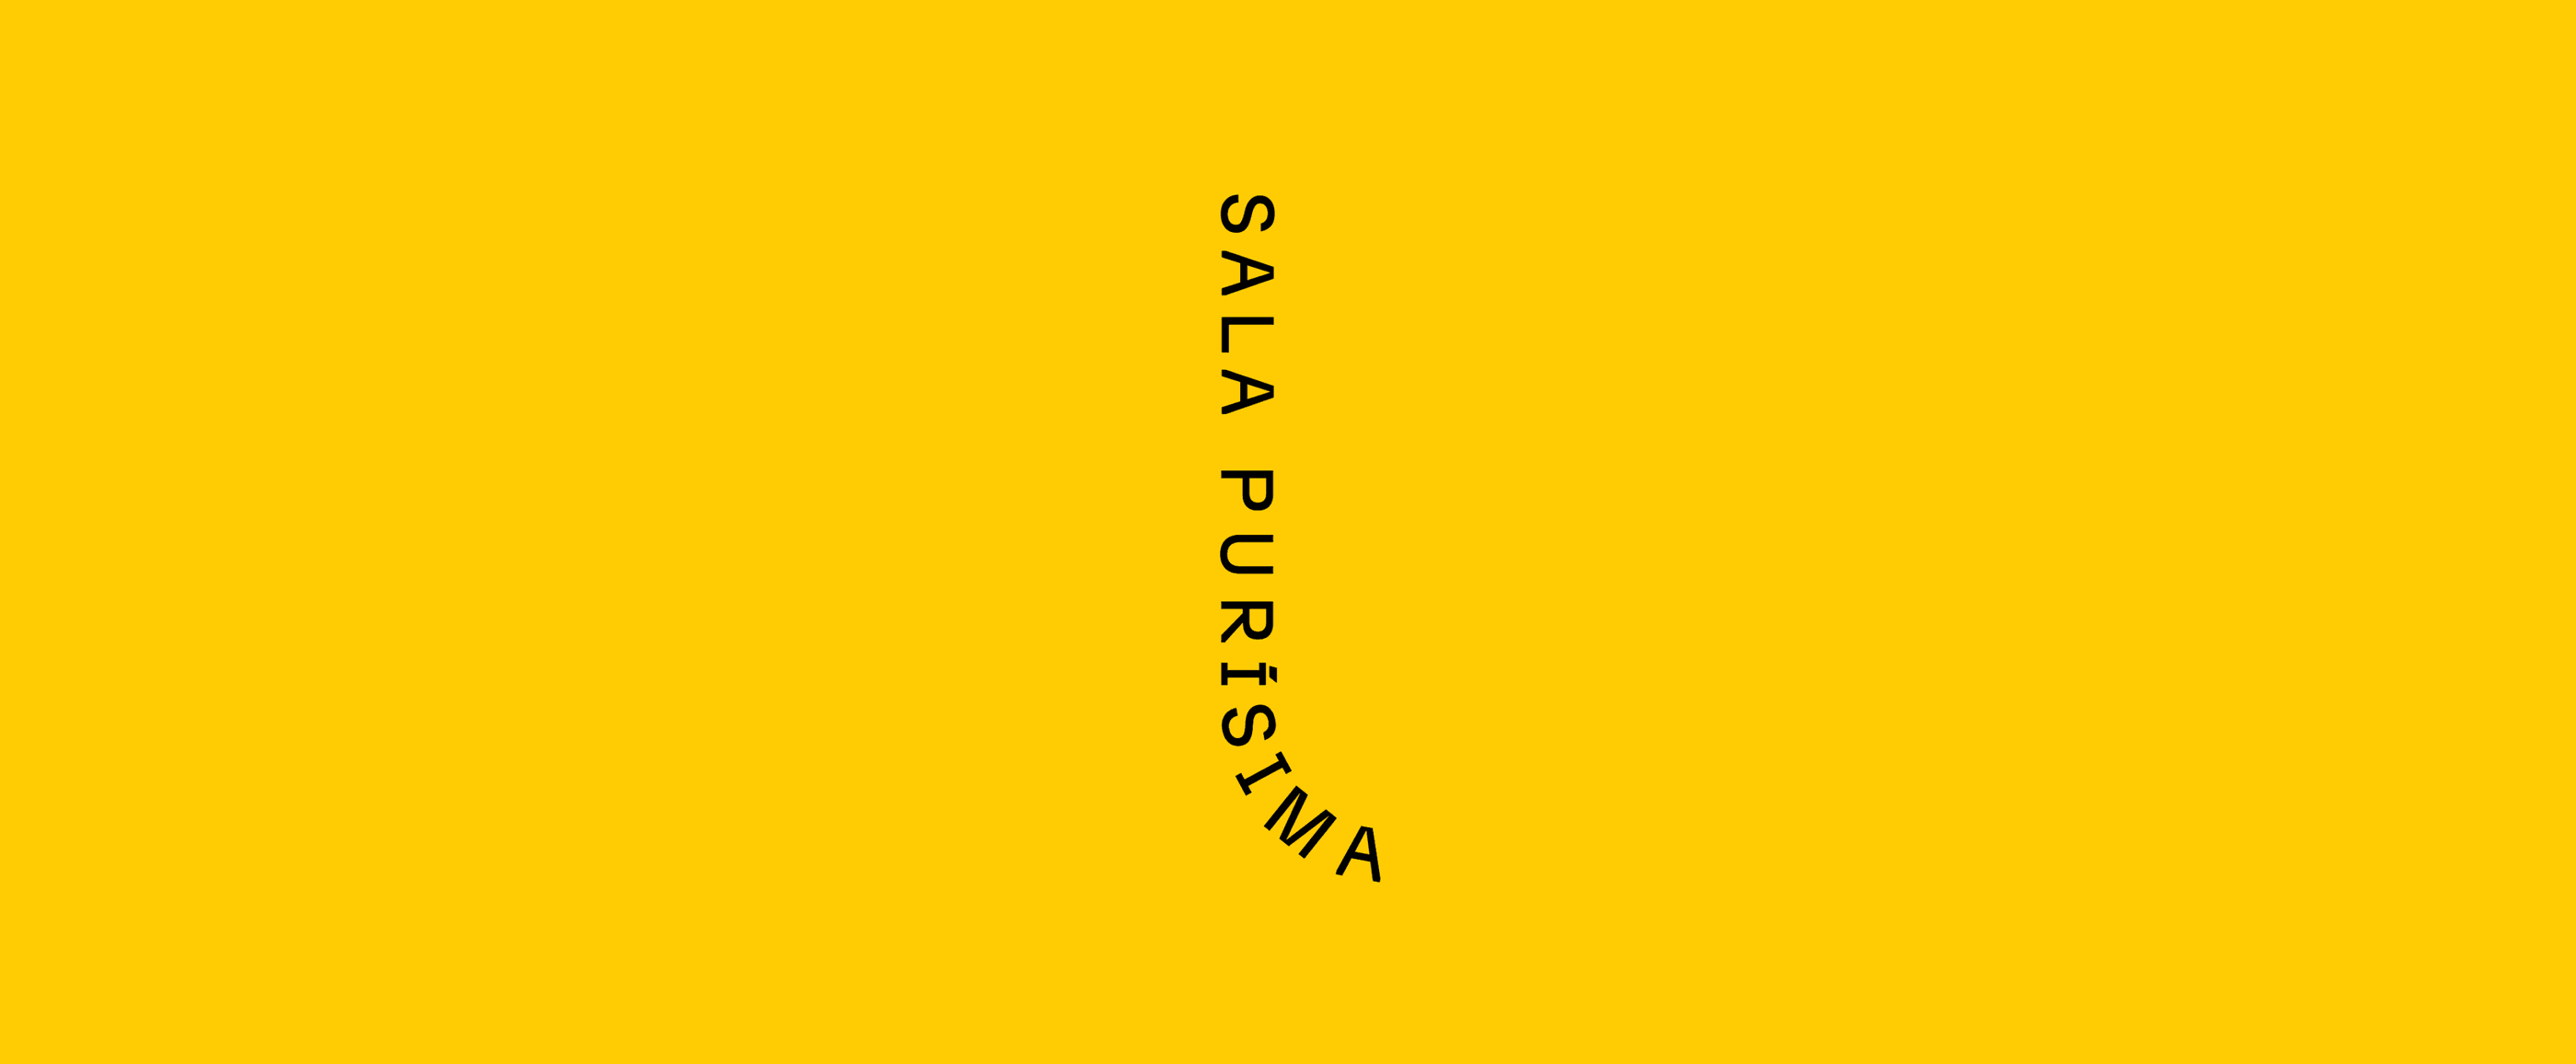 The Purísima sala logo - adding 'sala' to the curve.